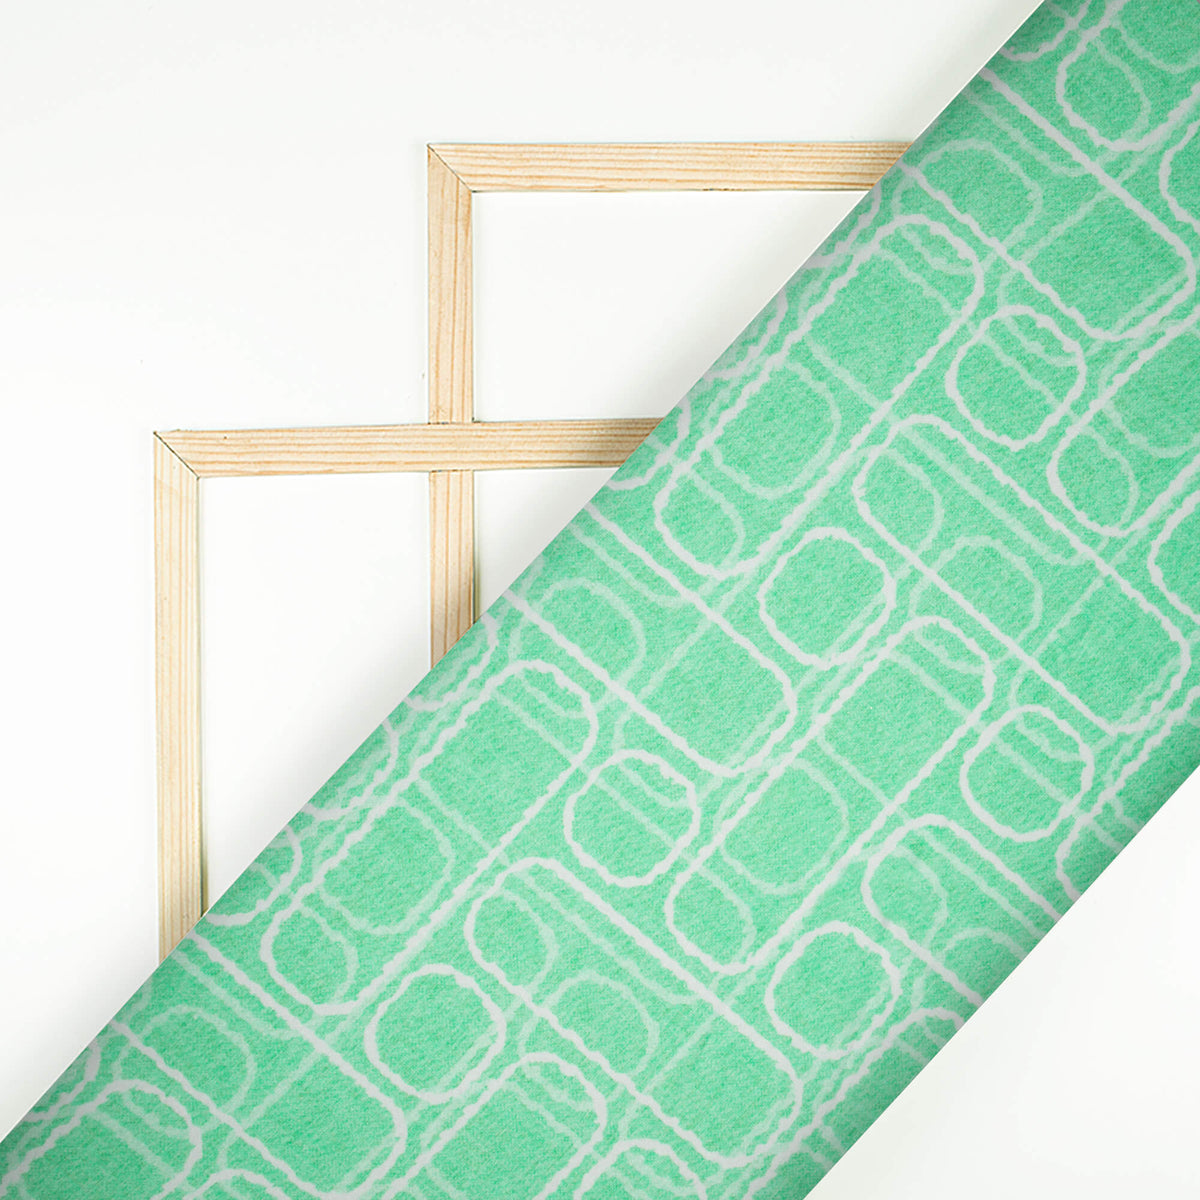 Paris Green And White Geometric Pattern Digital Print Premium Lush Satin Fabric